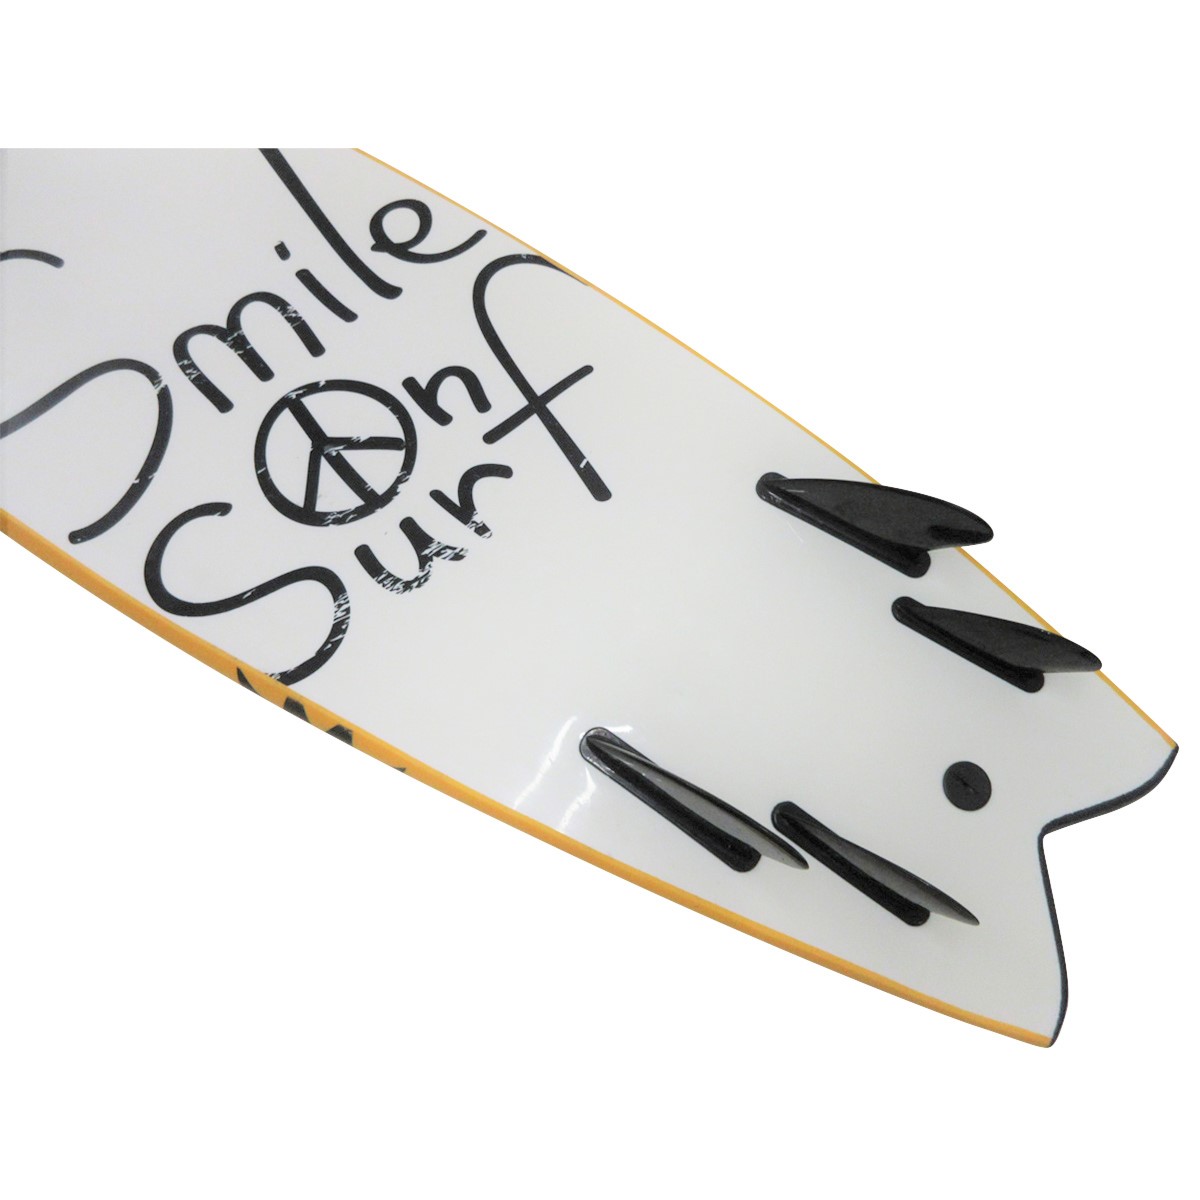 Smile On Surf / スポンジ 5`10